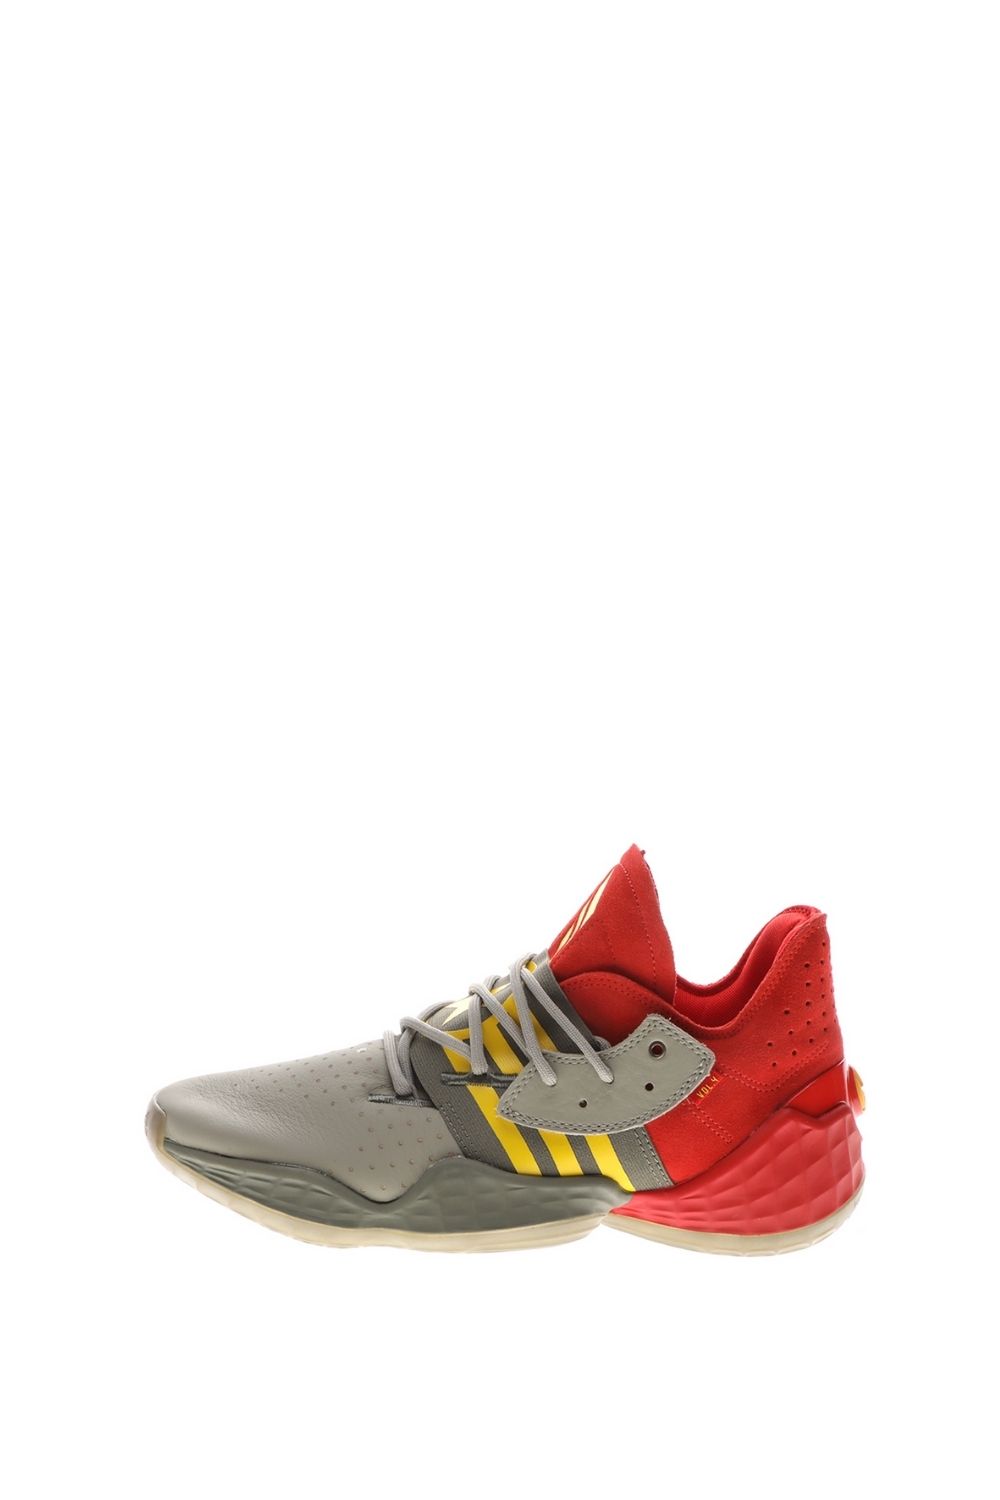 adidas Performance - Ανδρικά παπούτσια basketball adidas Performance Crazy X 4 γκρι κόκκινα Ανδρικά/Παπούτσια/Αθλητικά/Basketball